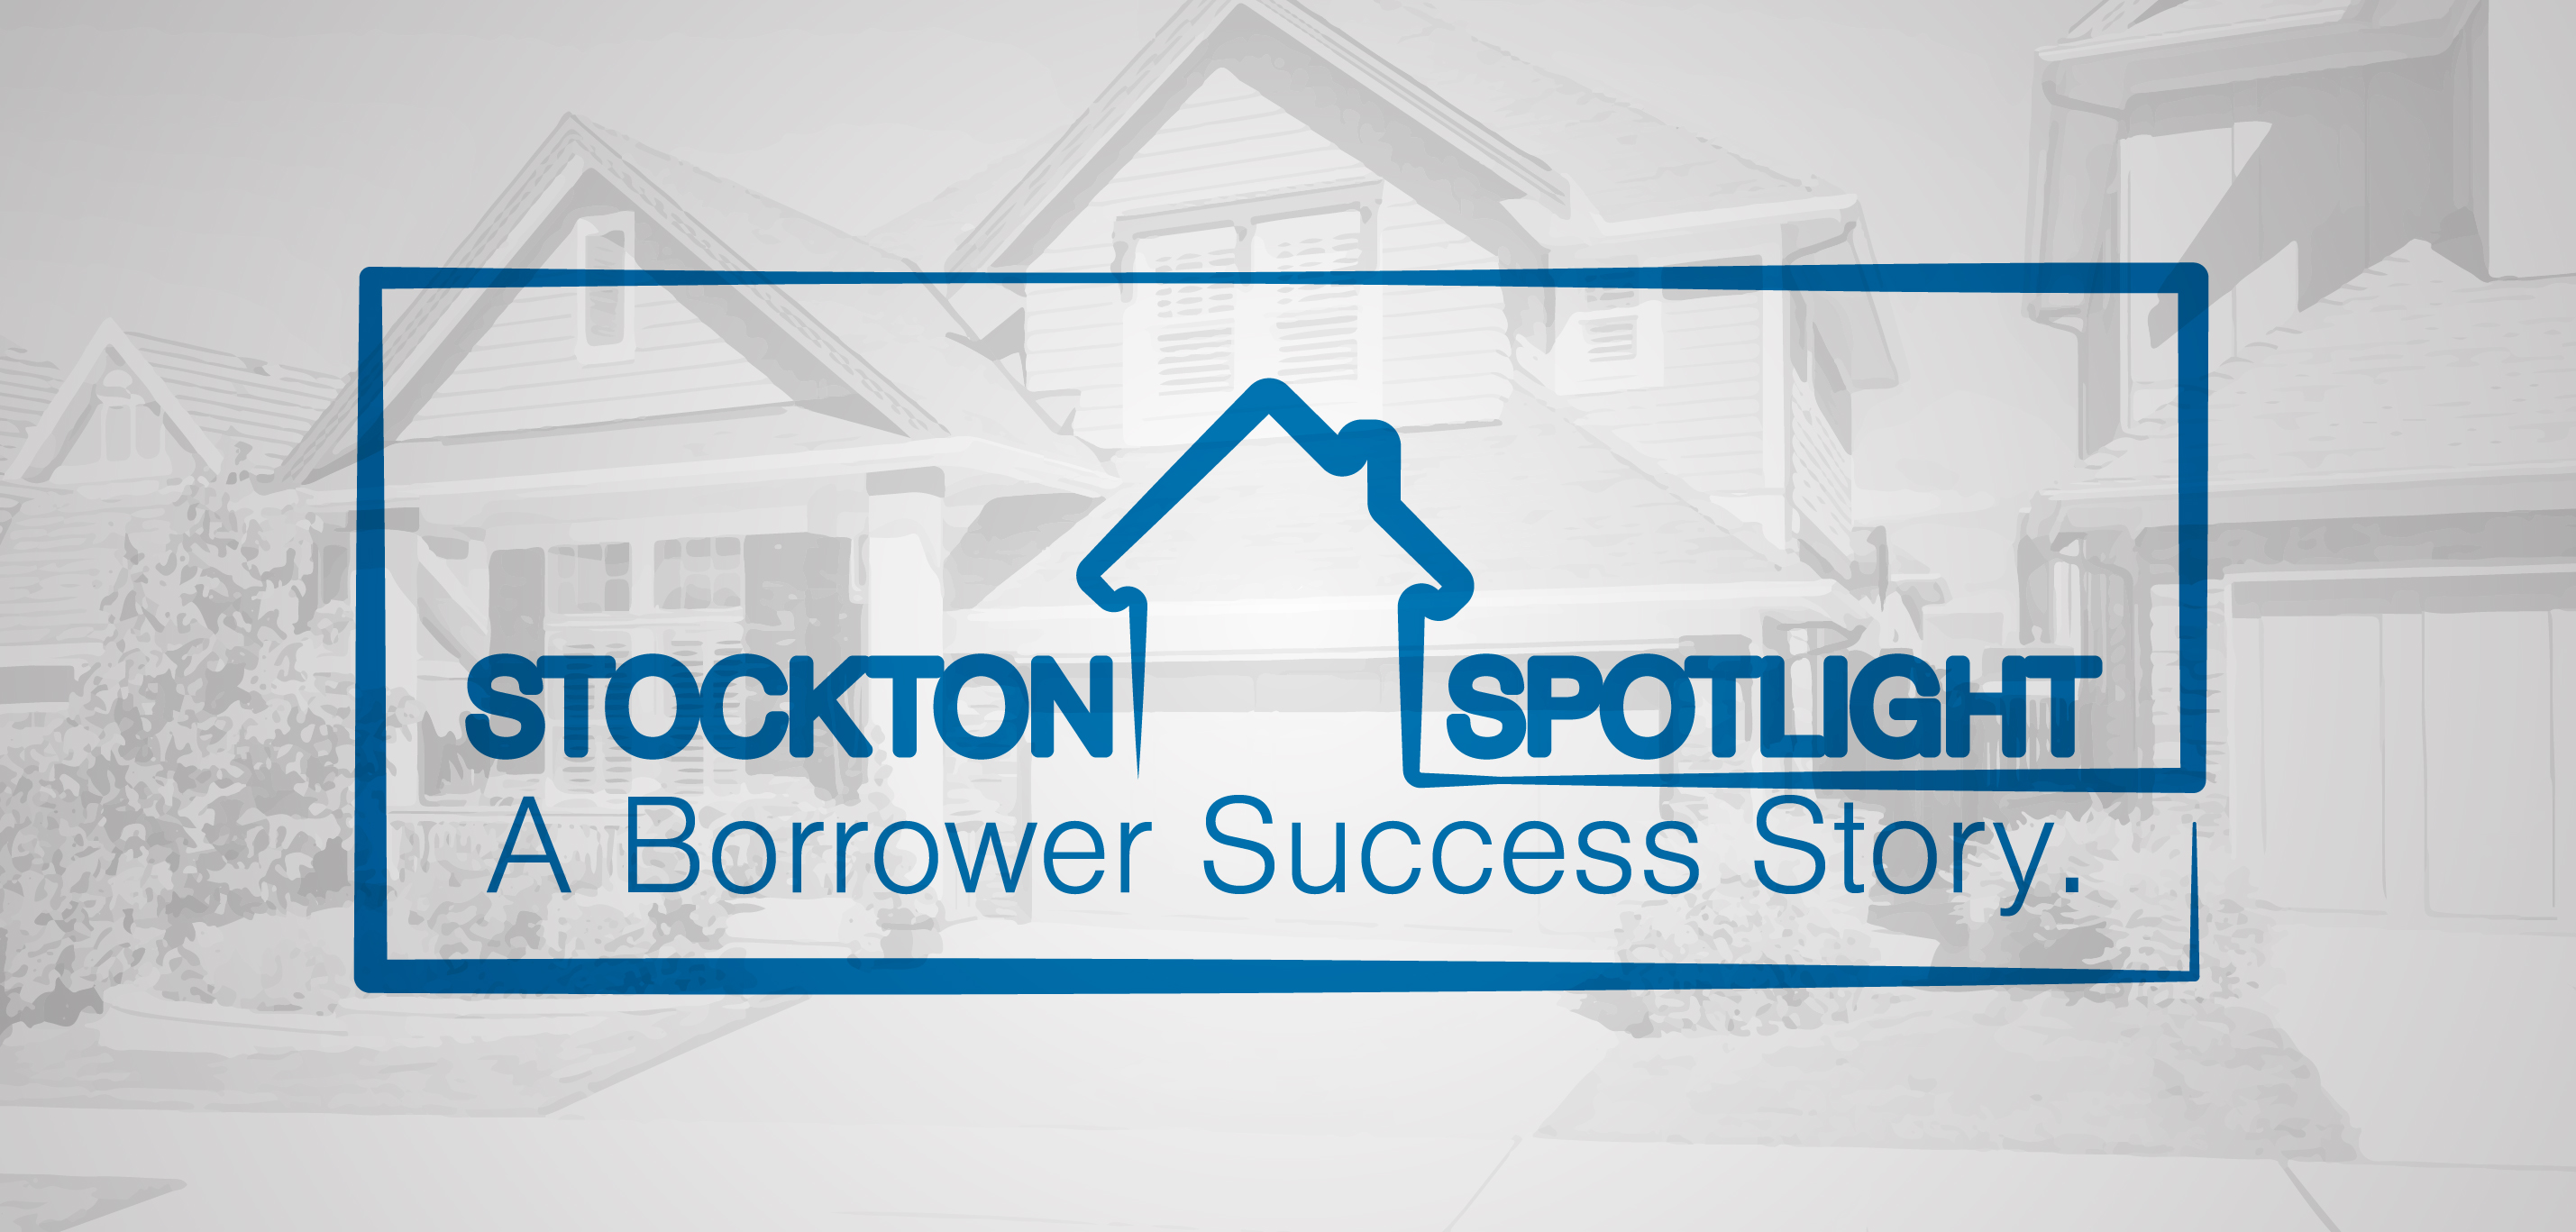 Stockton_Spotlight_logo_graphic-01